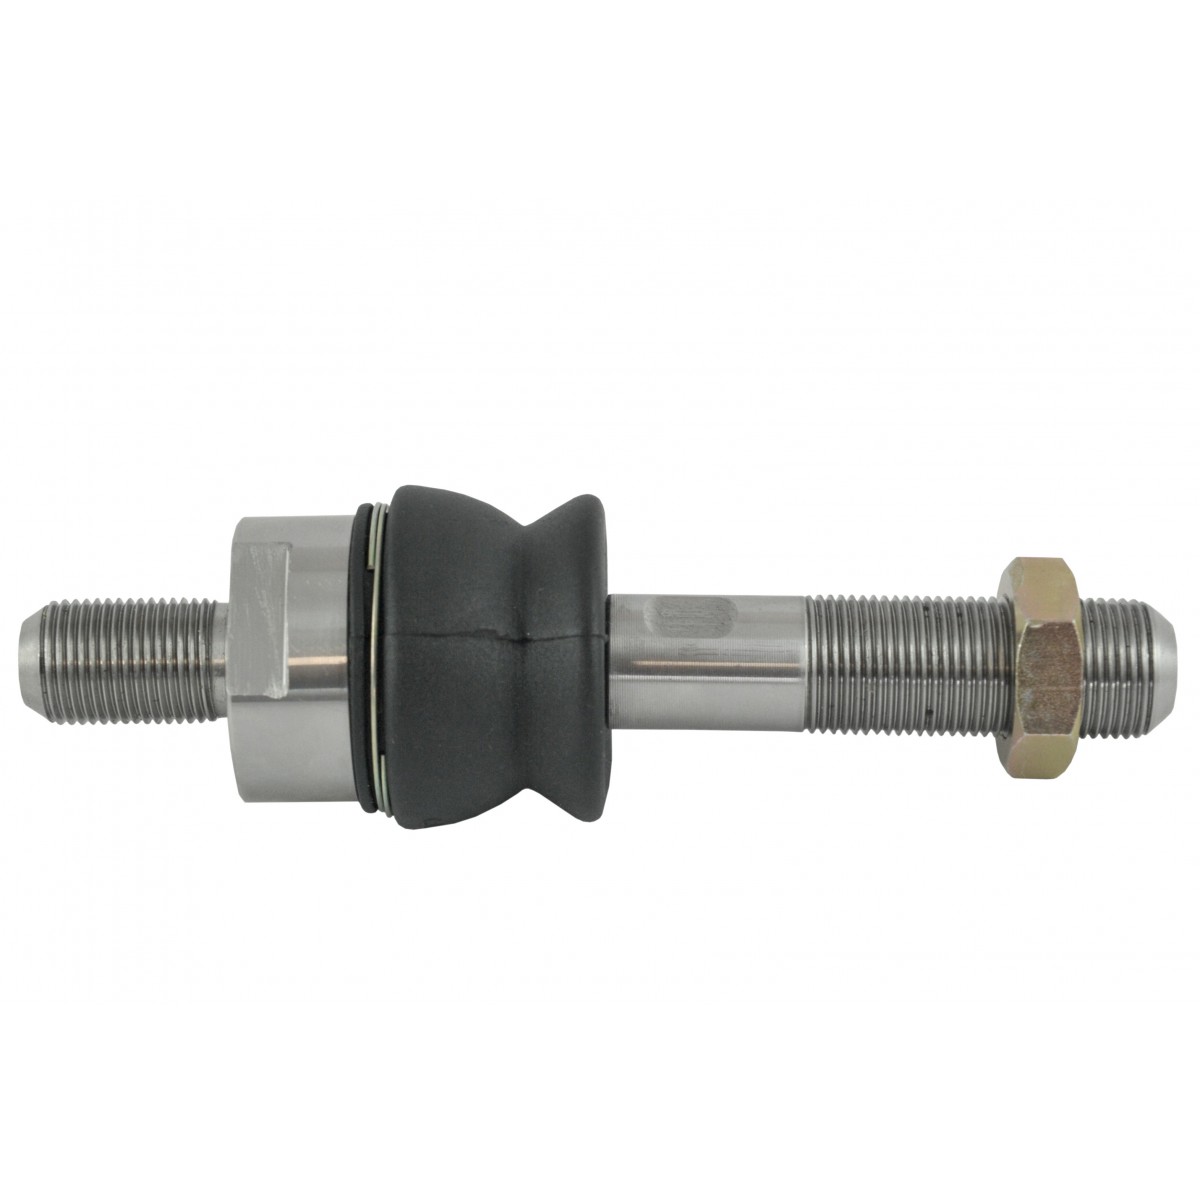 Rod end 158 mm, M18 / M20 joint, Kubota connector L4708, L5018